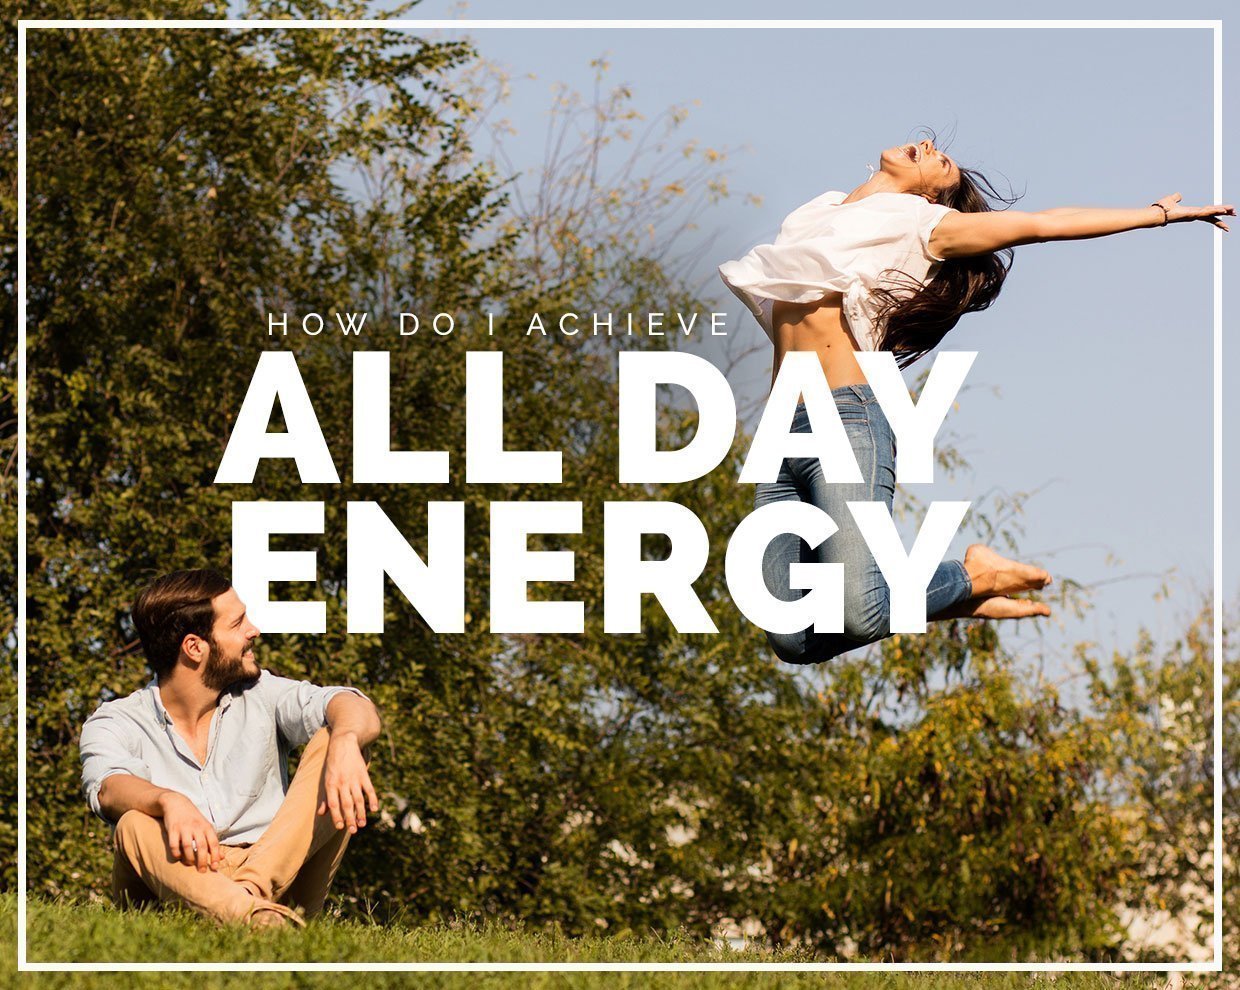 How do I achieve all day energy?